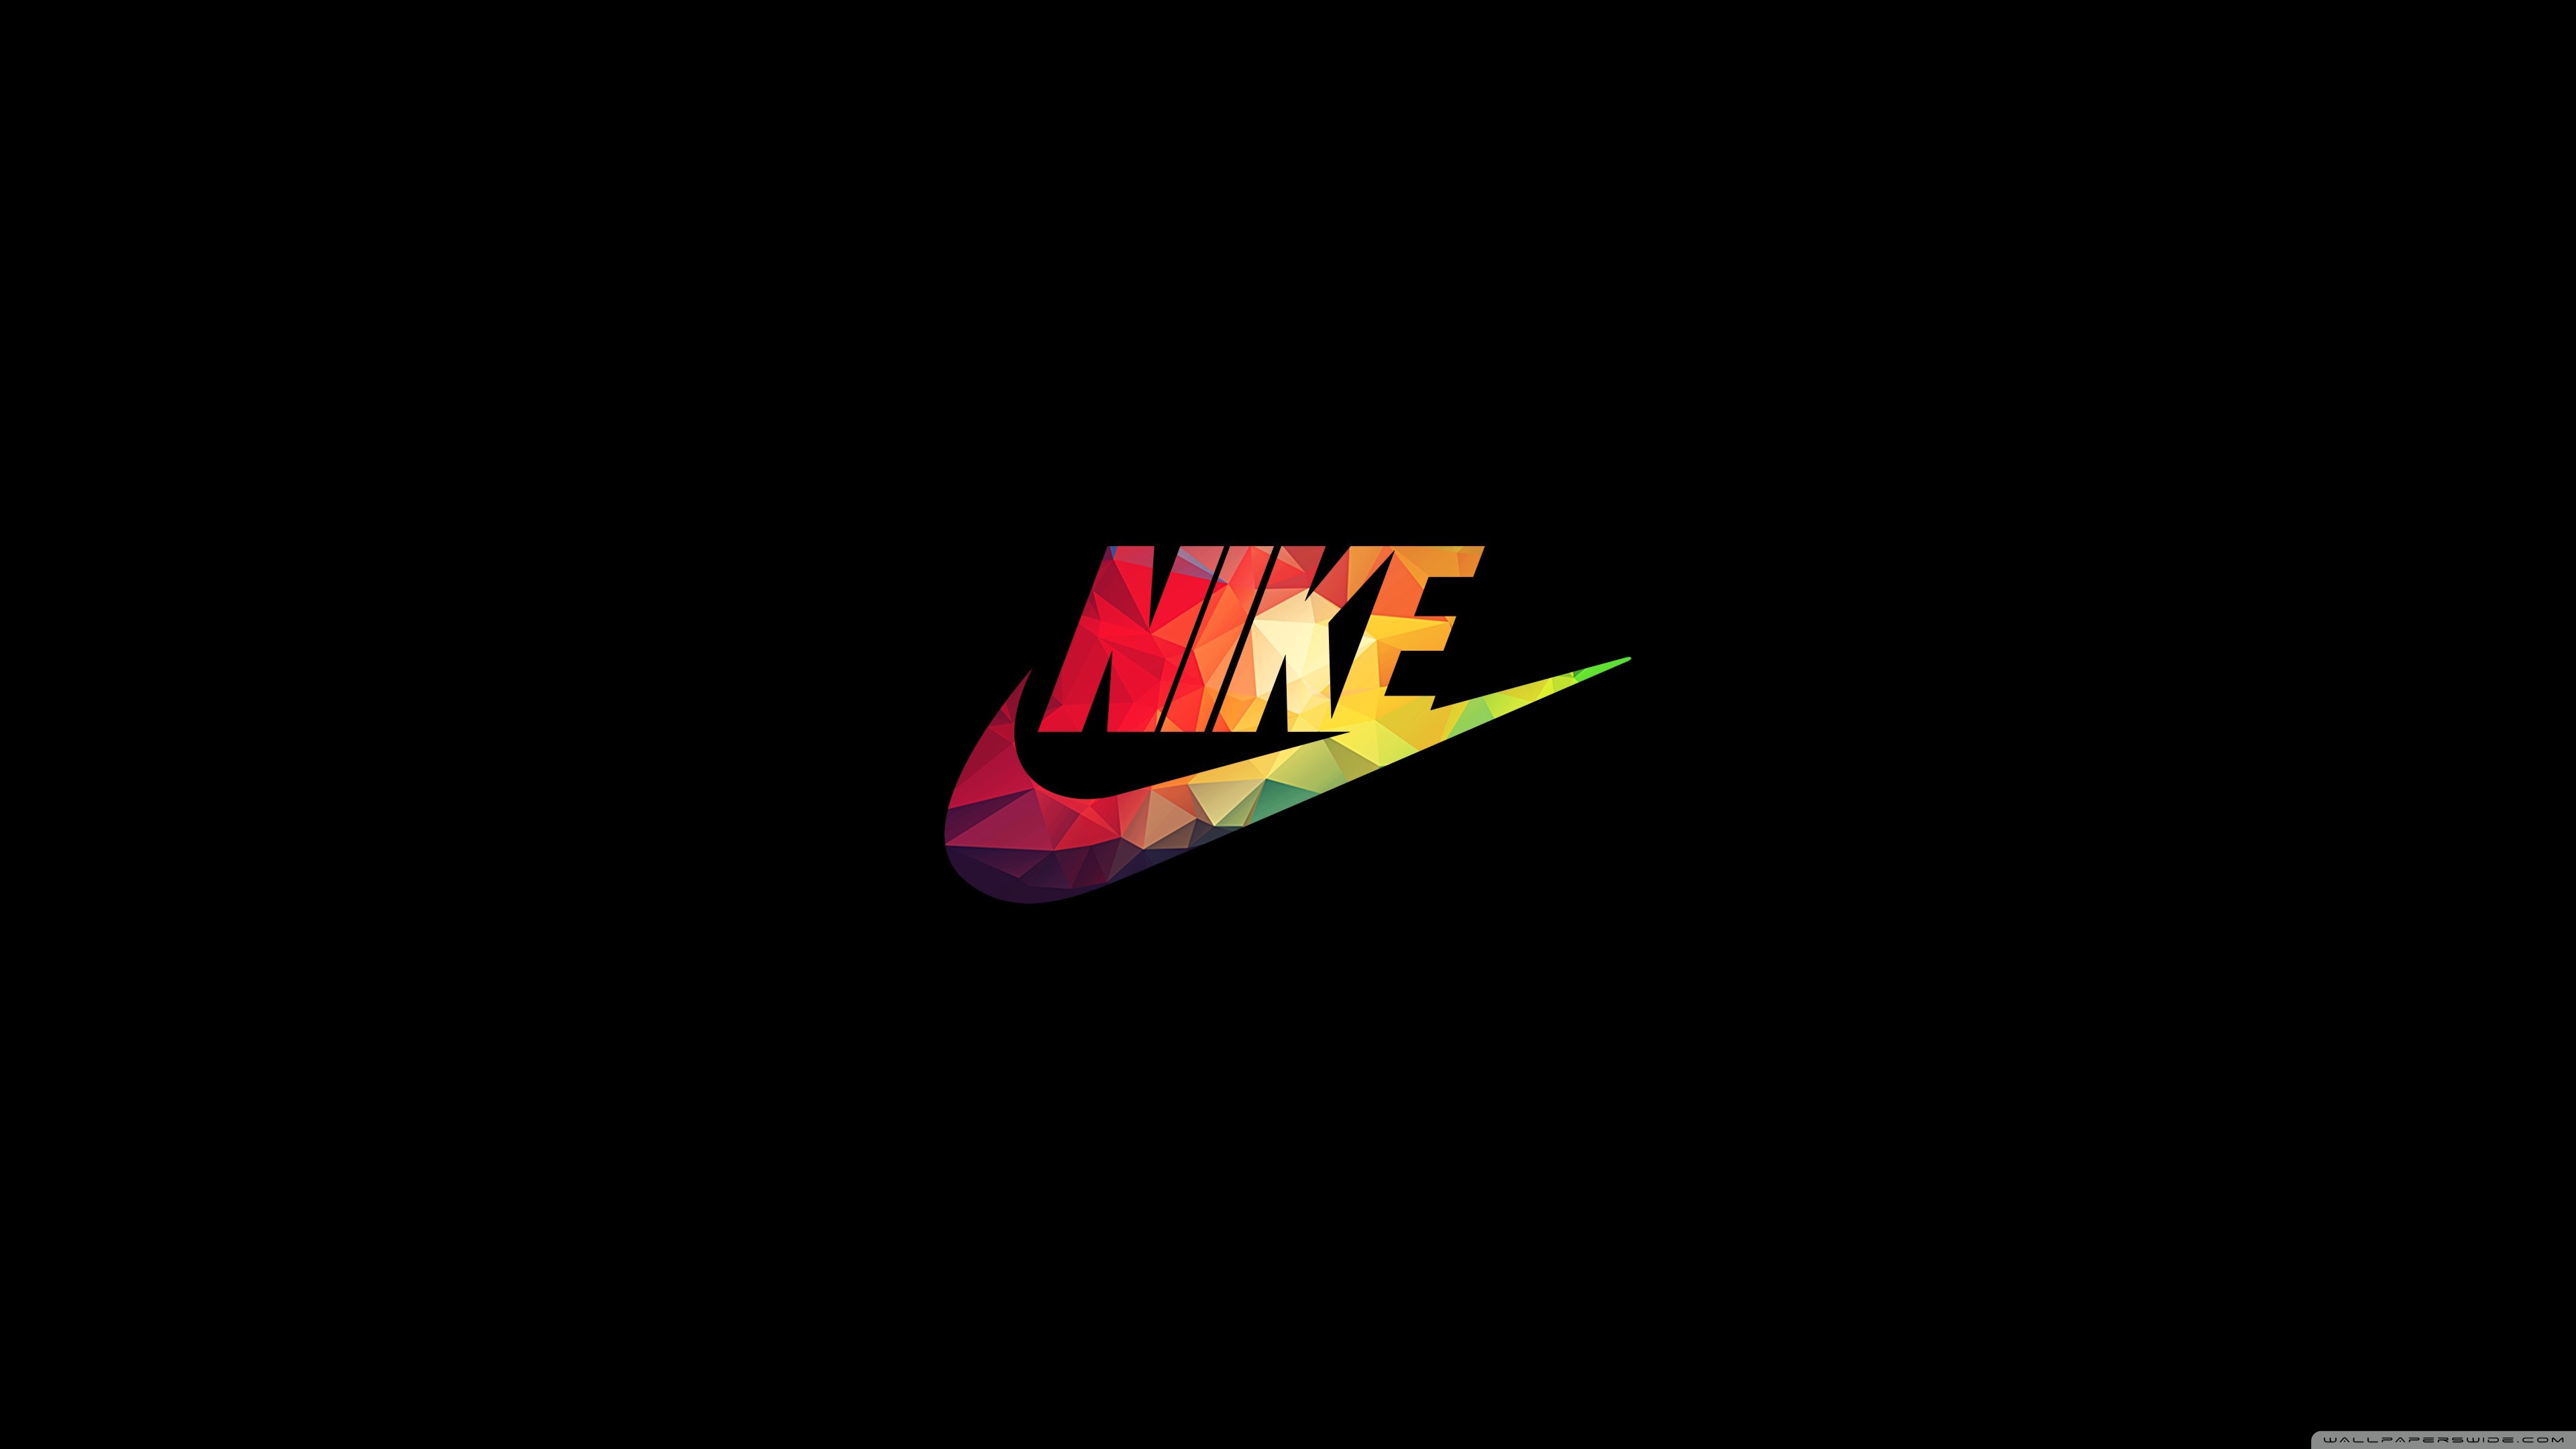 Nike Live Wallpaper Download